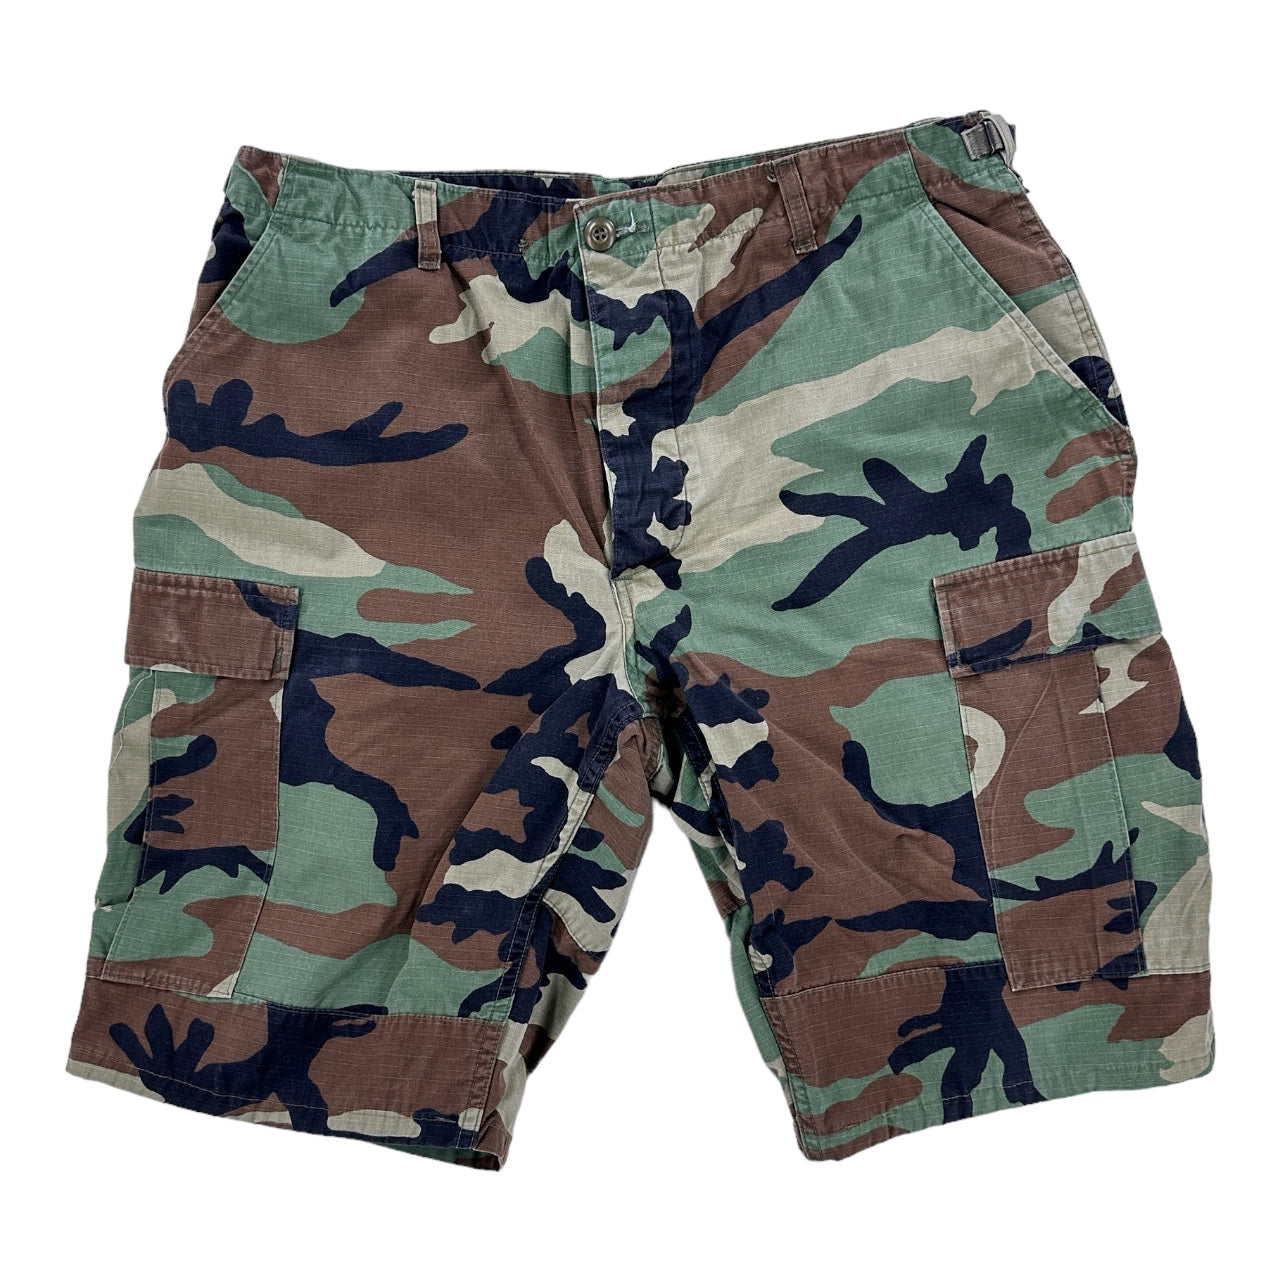 Rugged Military Uniform Camo Shorts - Large Great Lakes Reclaimed Denim